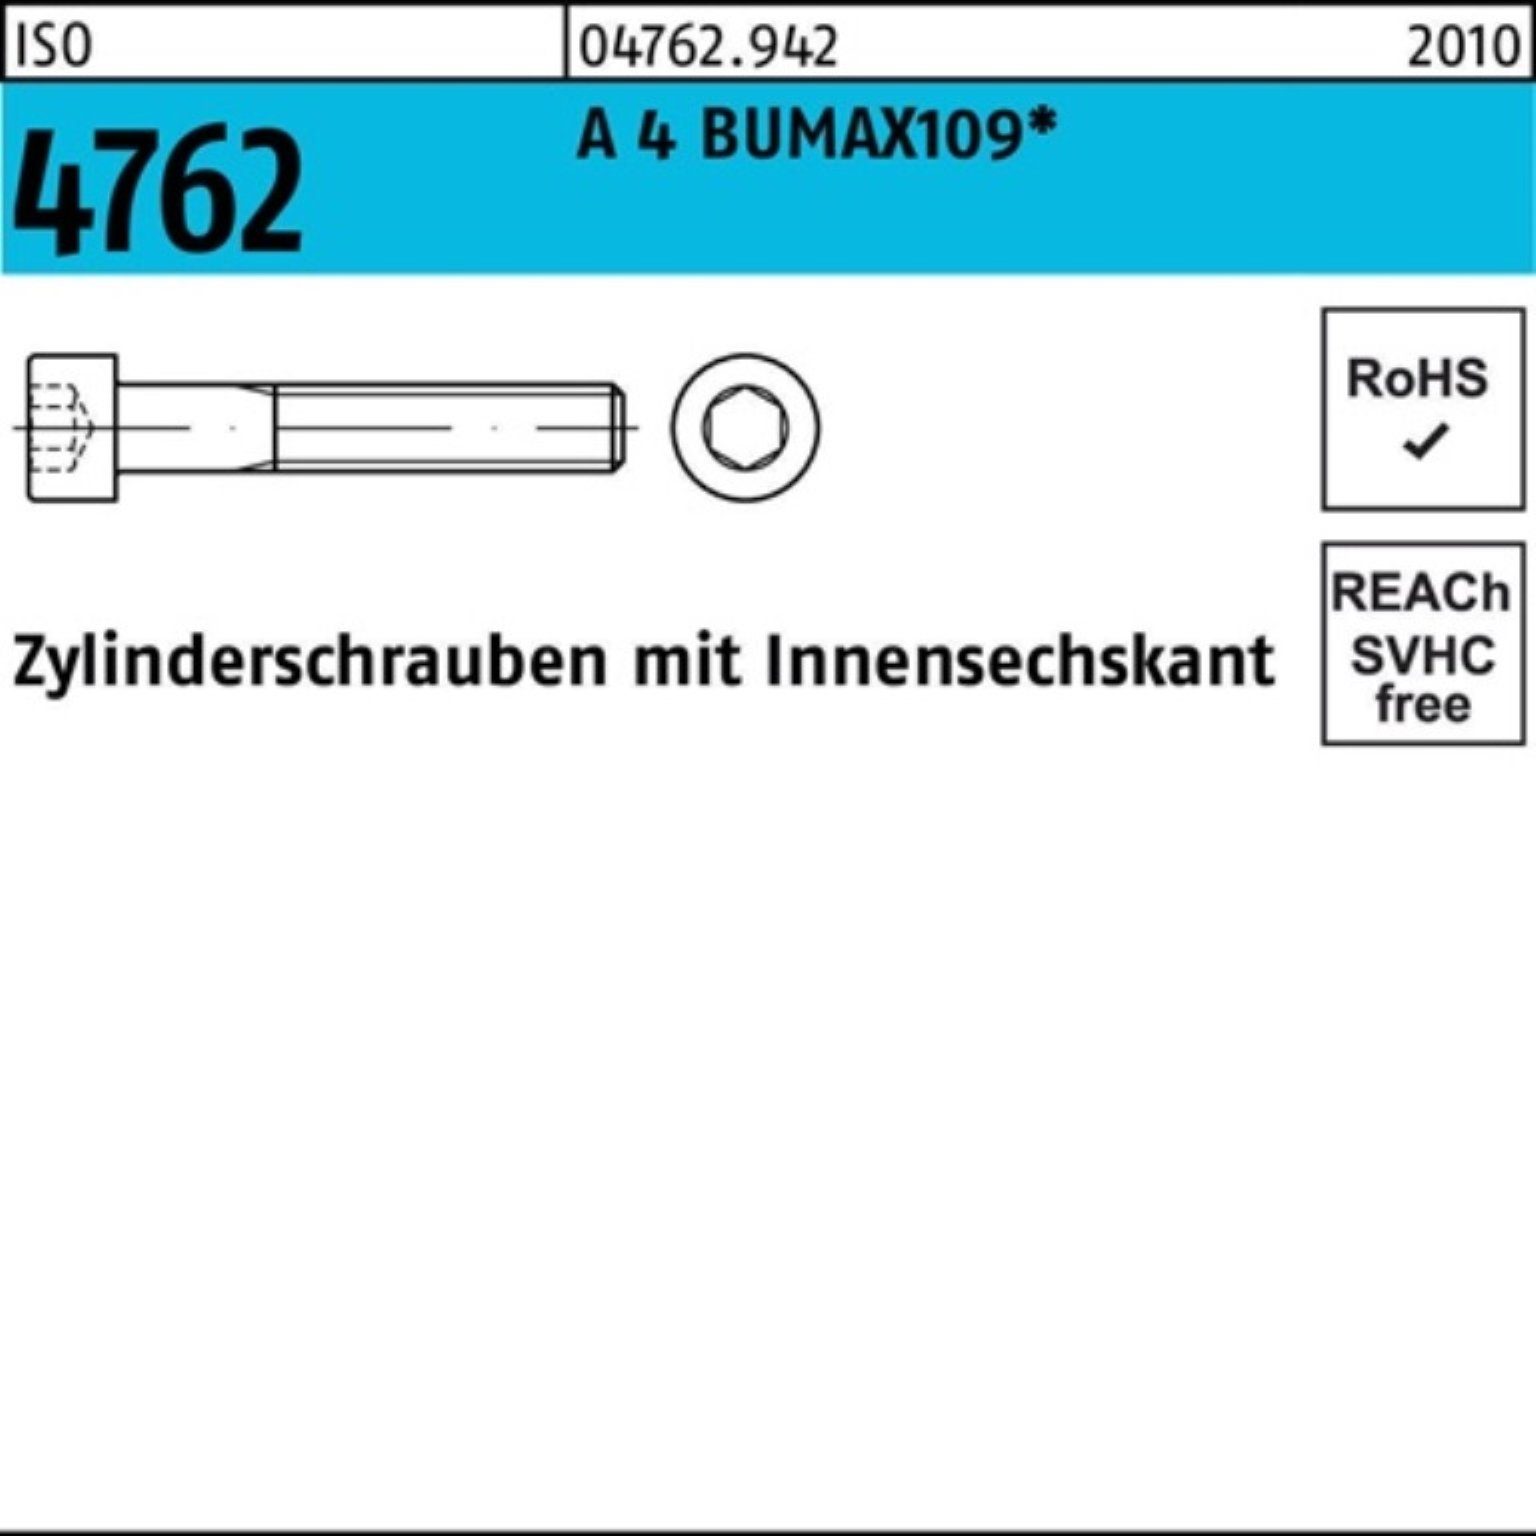 A Zylinderschraube 100 Innen-6kt Zylinderschraube M6x Bufab 4762 ISO BUMAX109 4 100er Pack 30